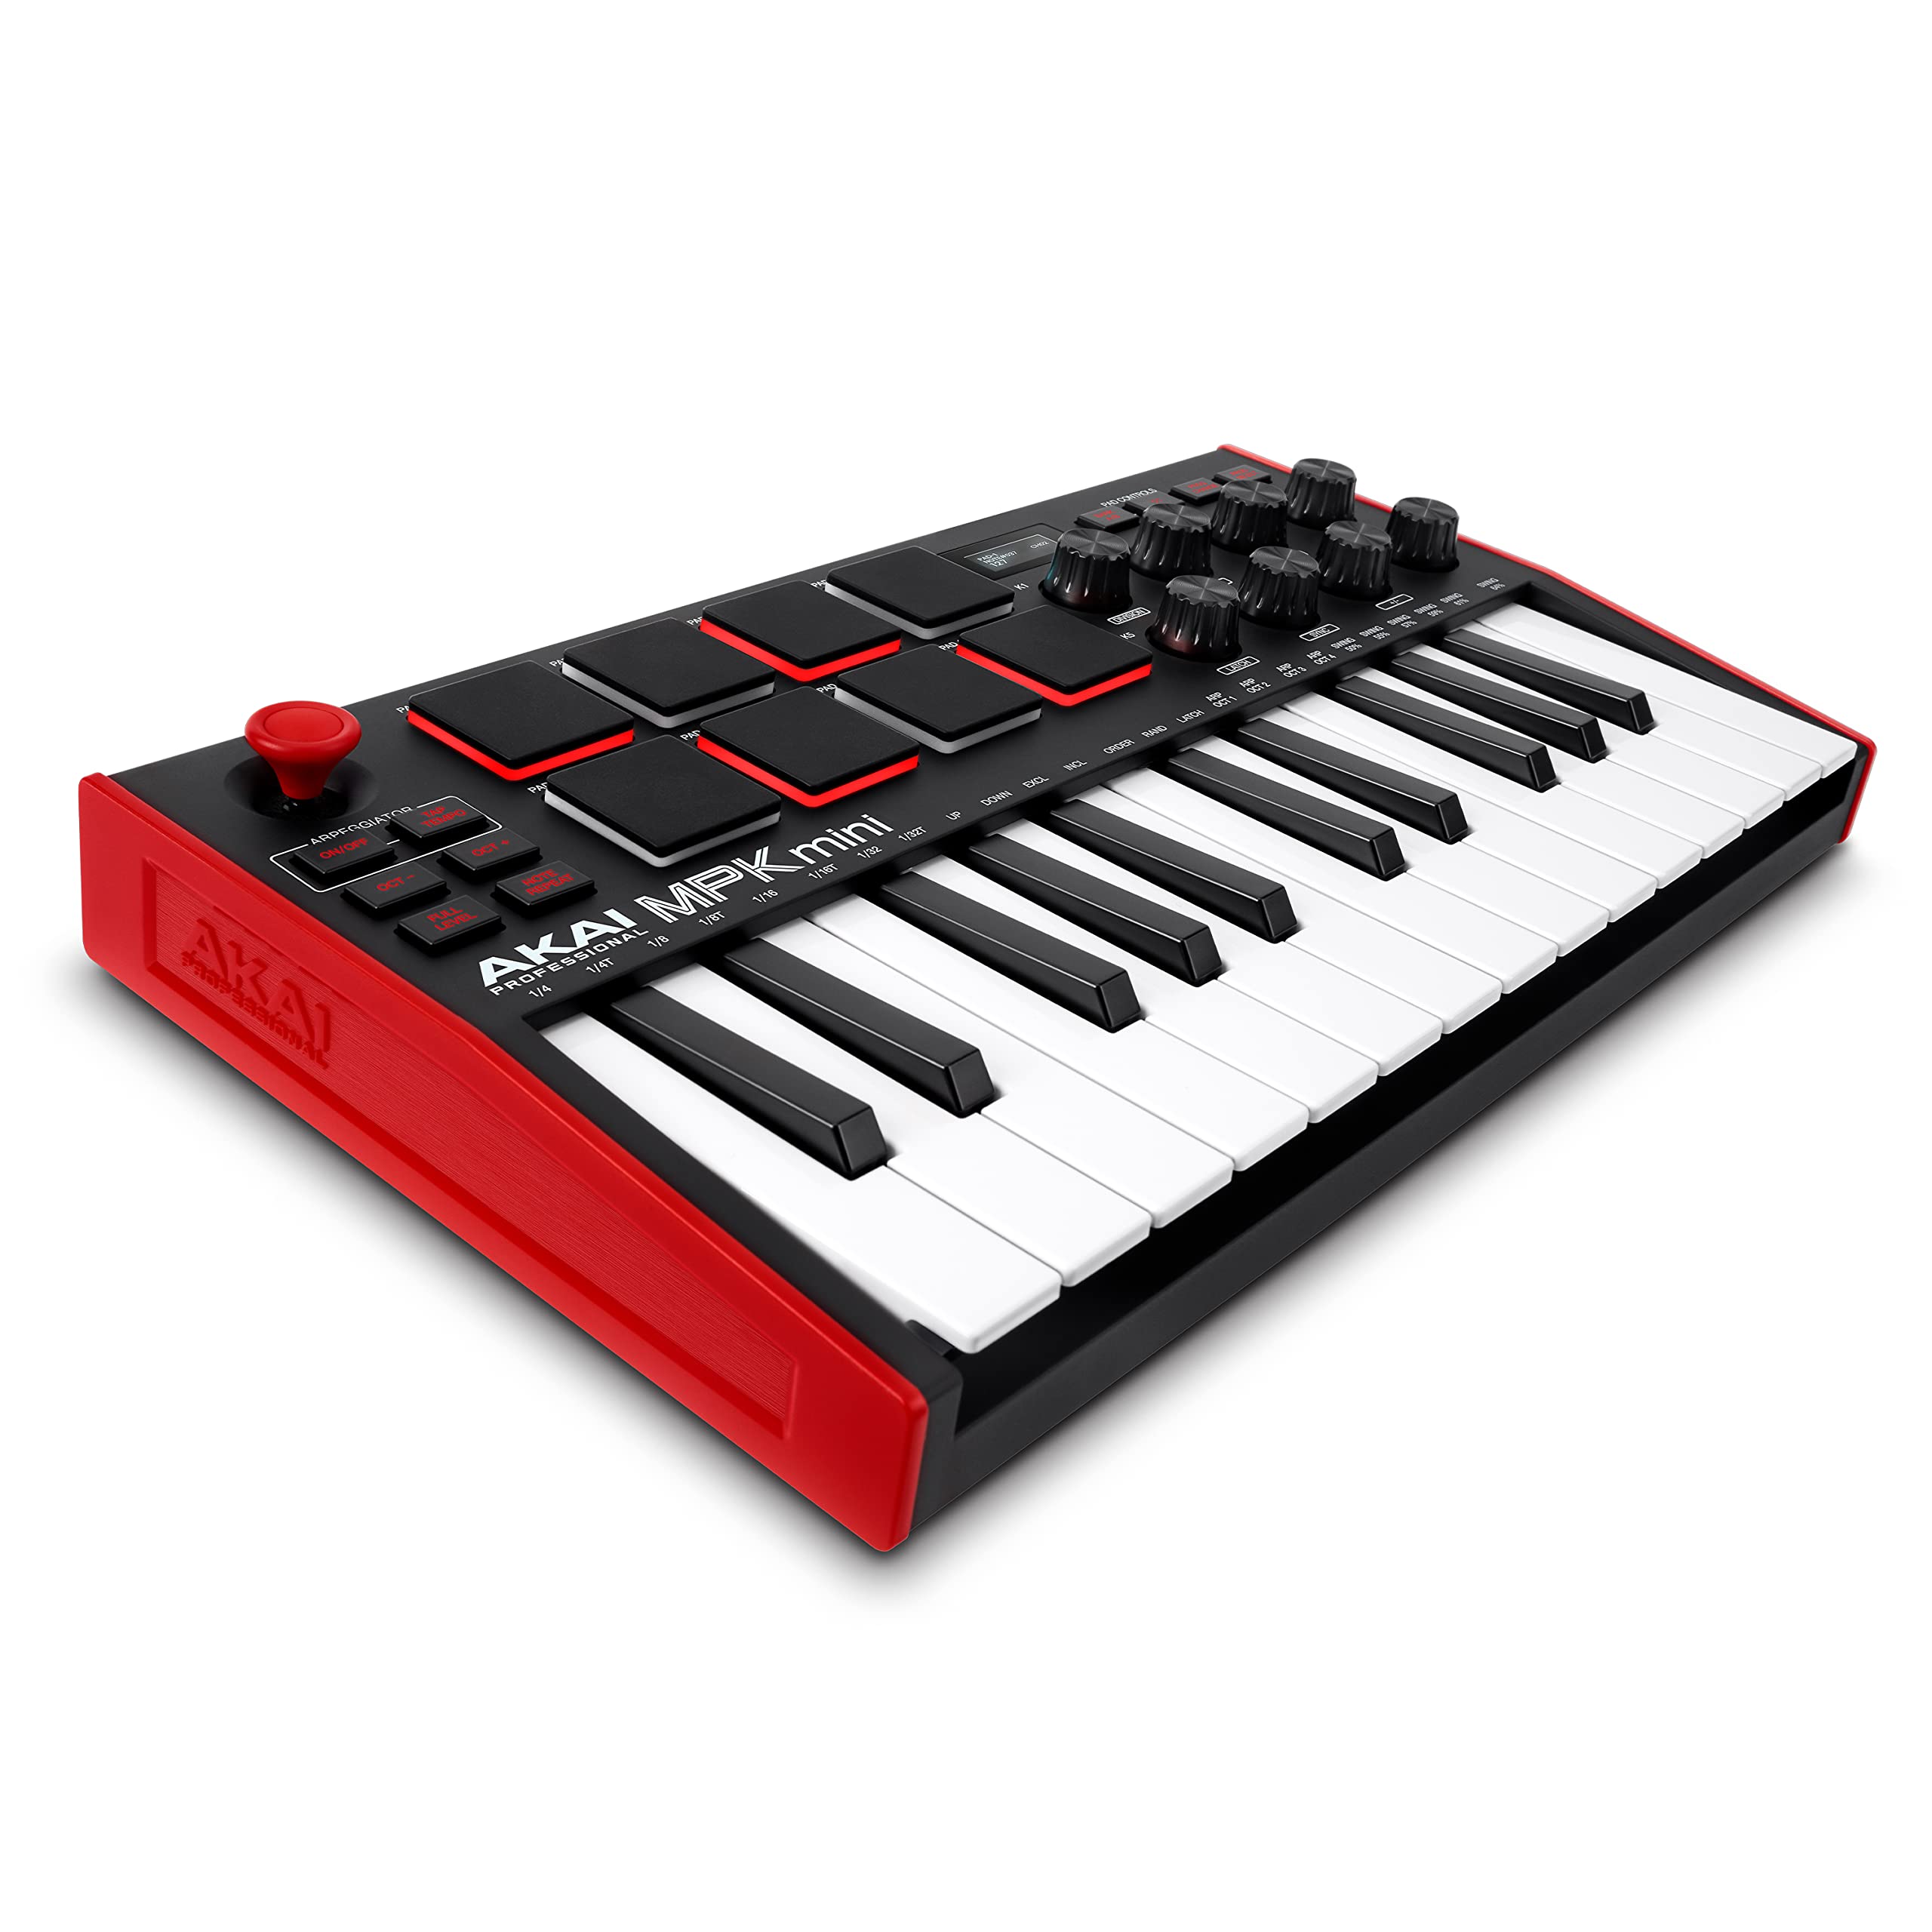 25-Key AKAI Professional MPK Mini MK3 USB MIDI Keyboard Controller w/ Drum Pads & Knobs $84.44 + Free Shipping